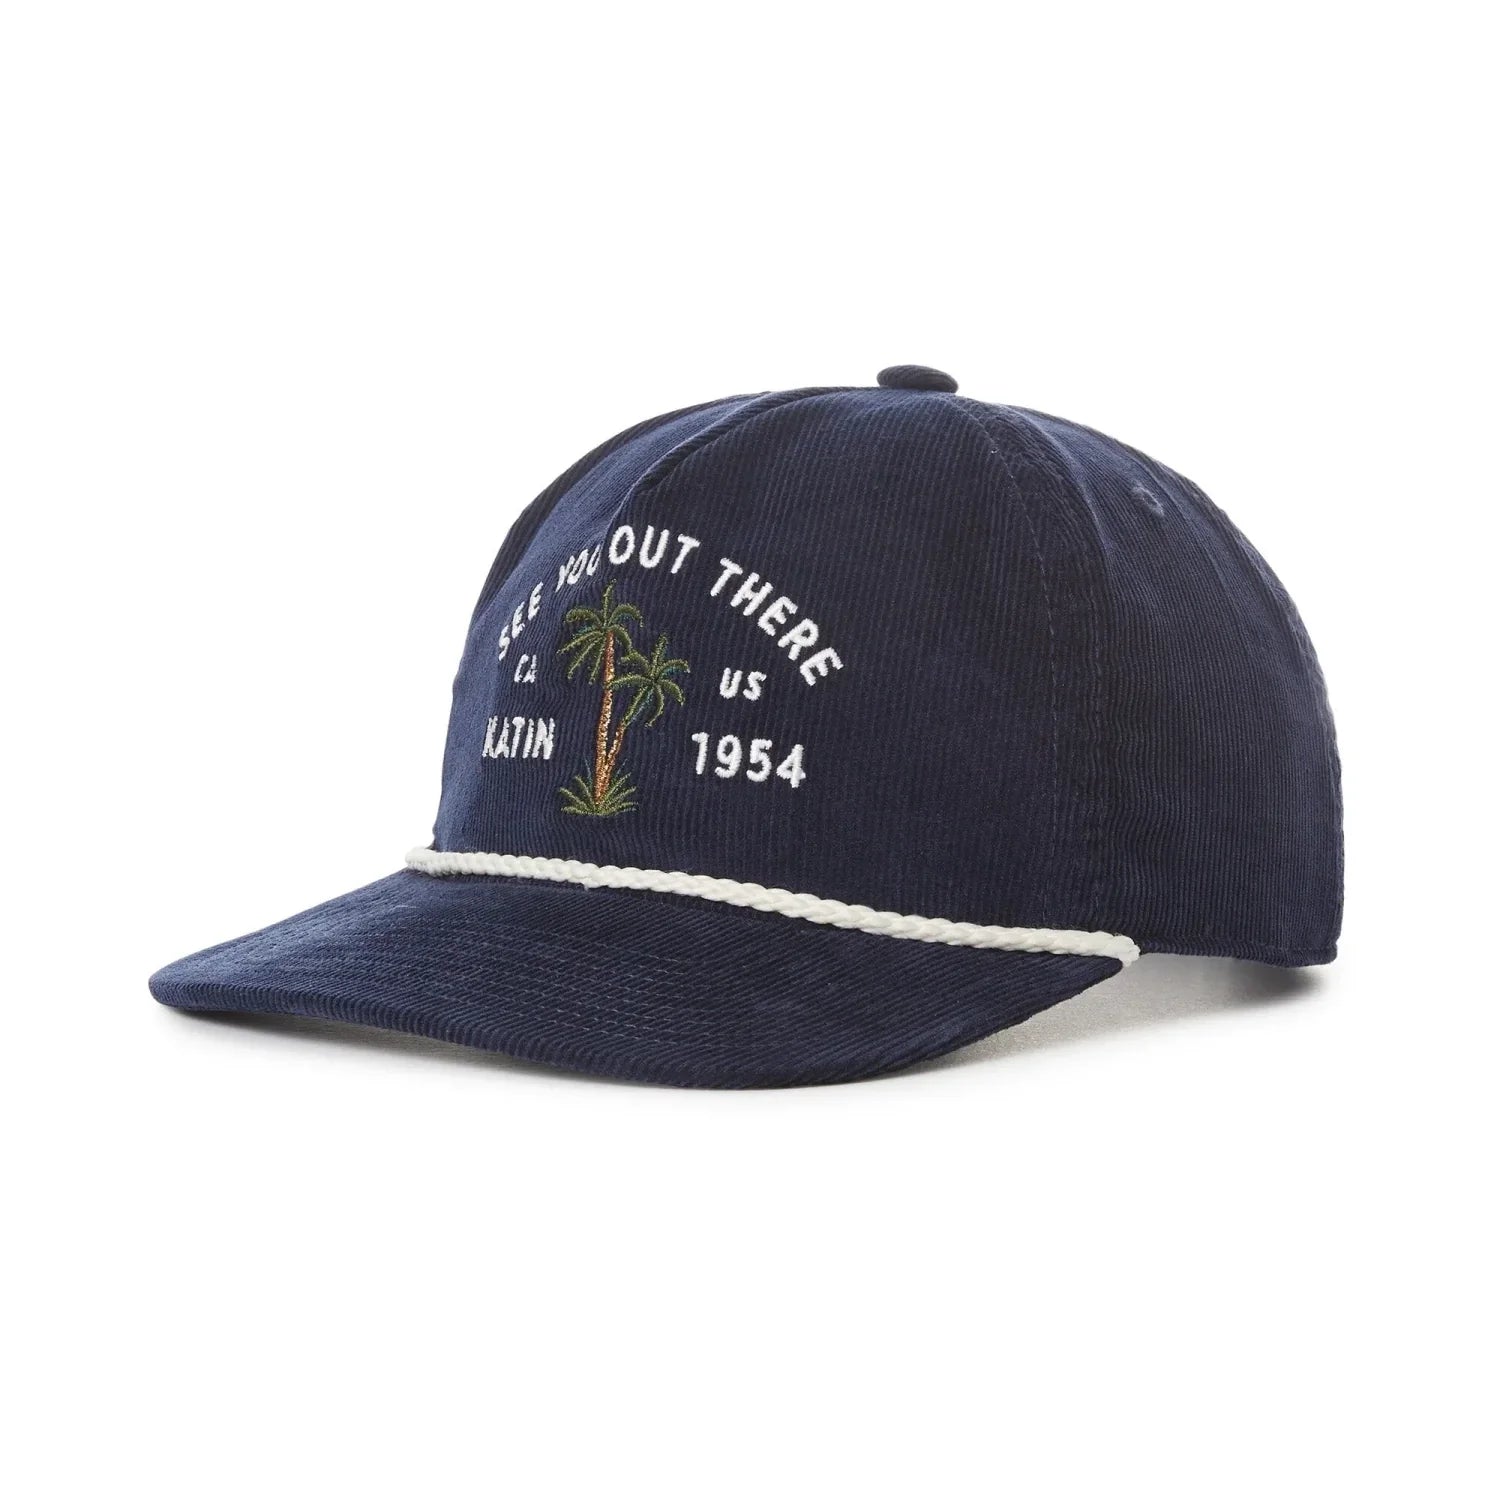 Katin 20. HATS_GLOVES_SCARVES - HATS Bermuda Hat NAVY NAVY O S